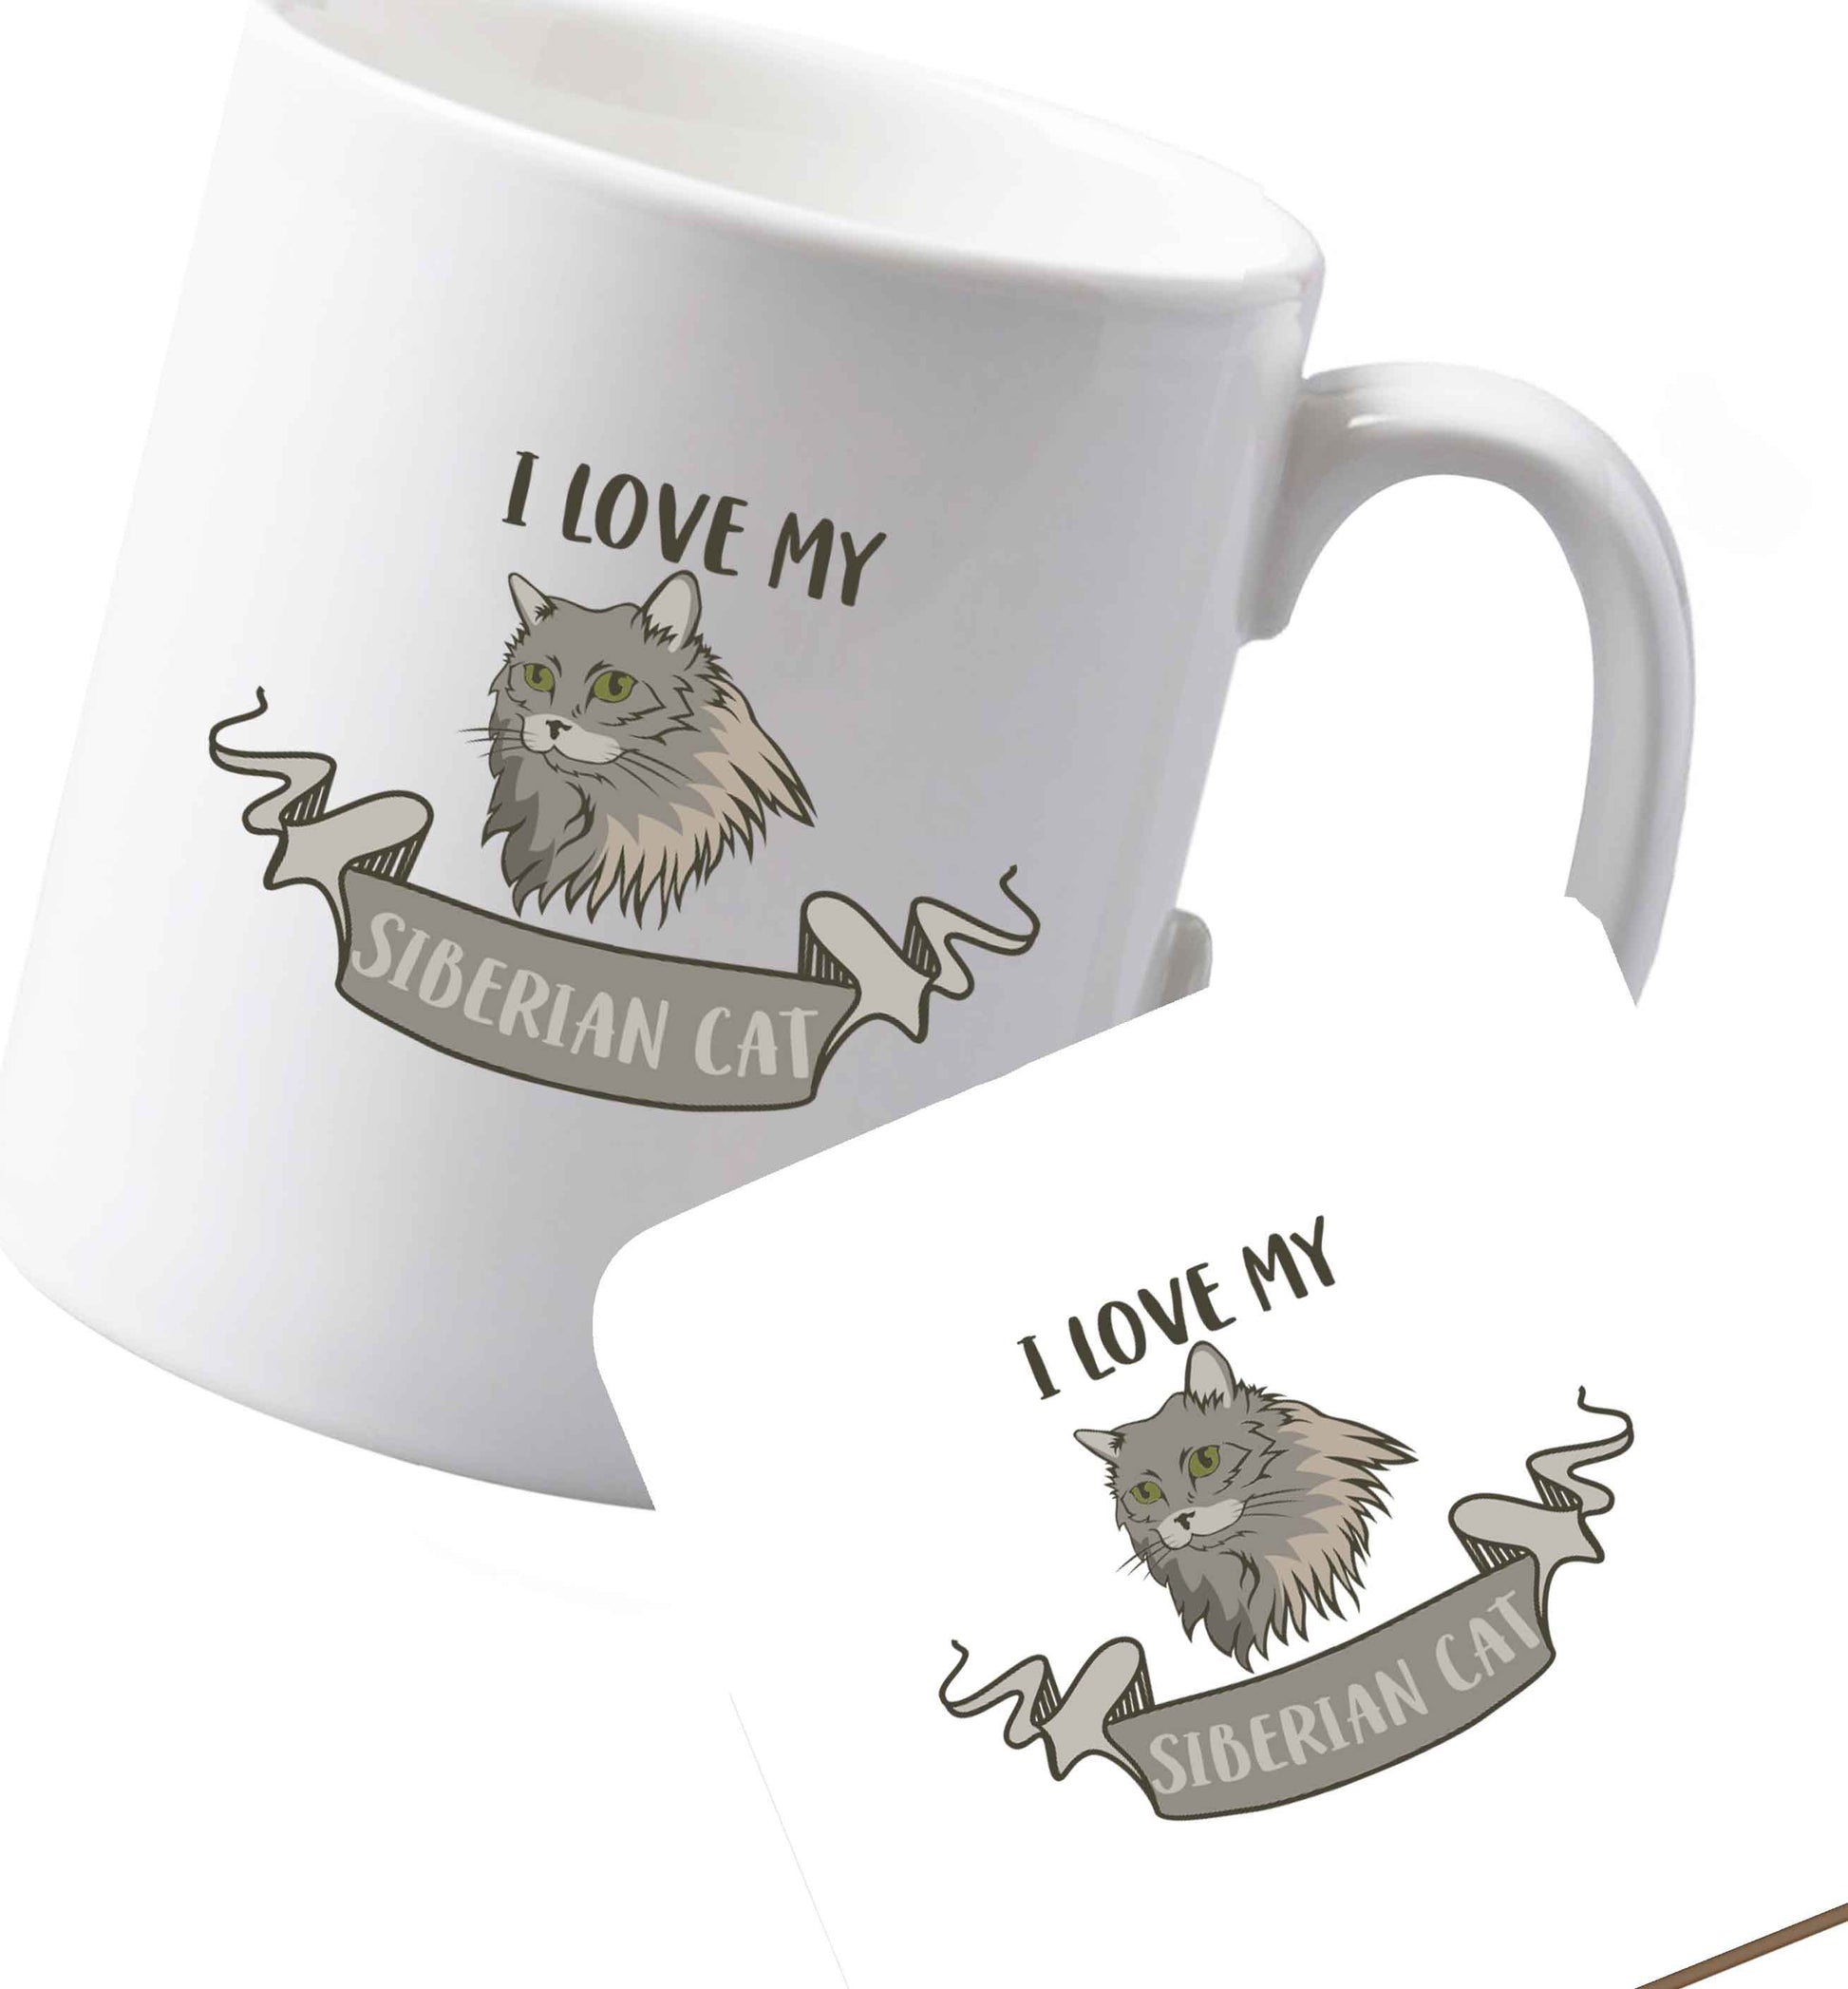 10 oz Ceramic mug and coaster I love my siberian cat both sides